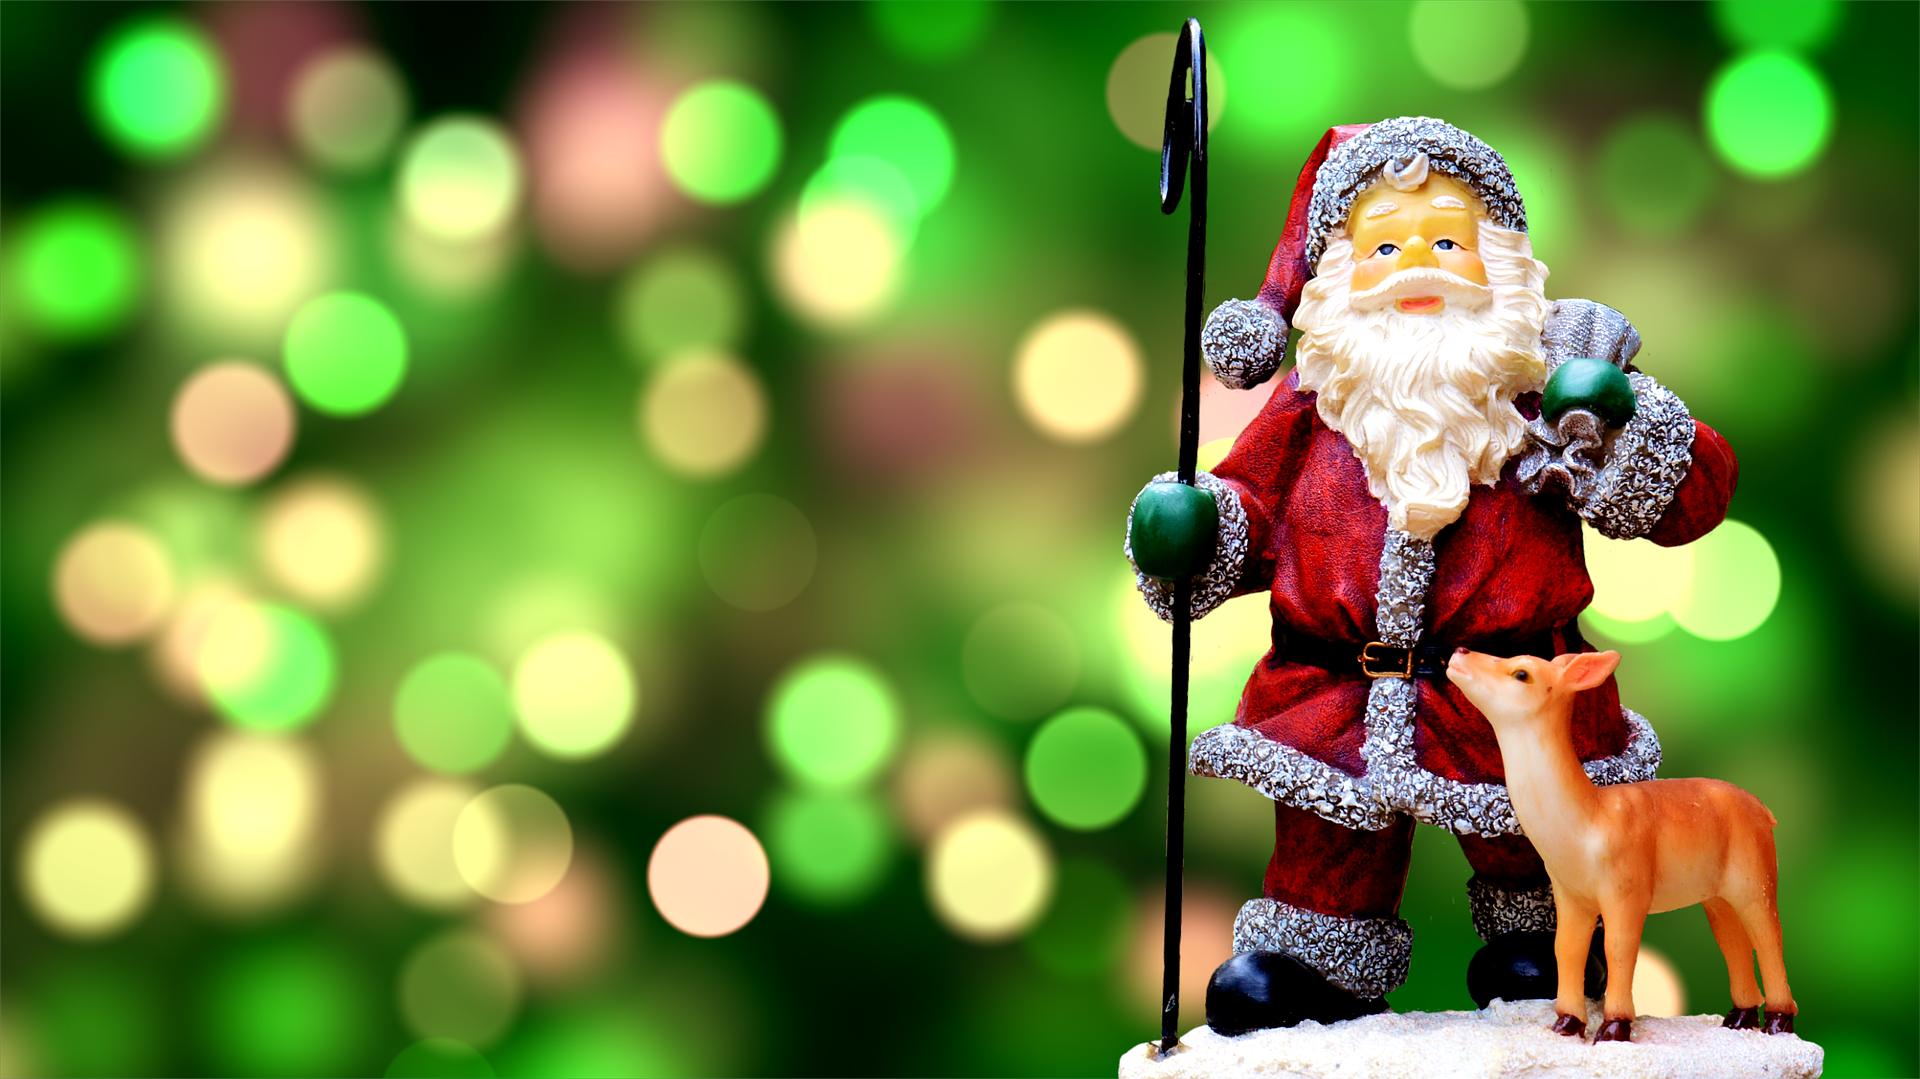 O que é o verdadeiro significado do Natal? | Portal Maratimba